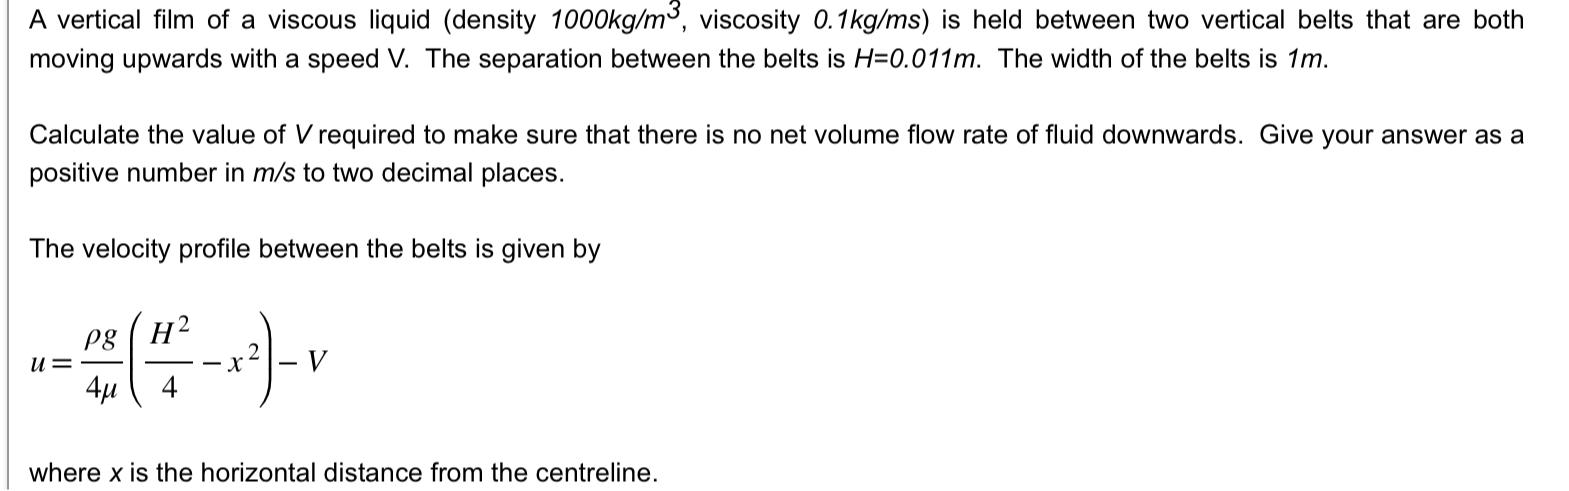 A vertical film of a viscous liquid (density 1000kg/m, viscosity 0.1kg/ms) is held between two vertical belts